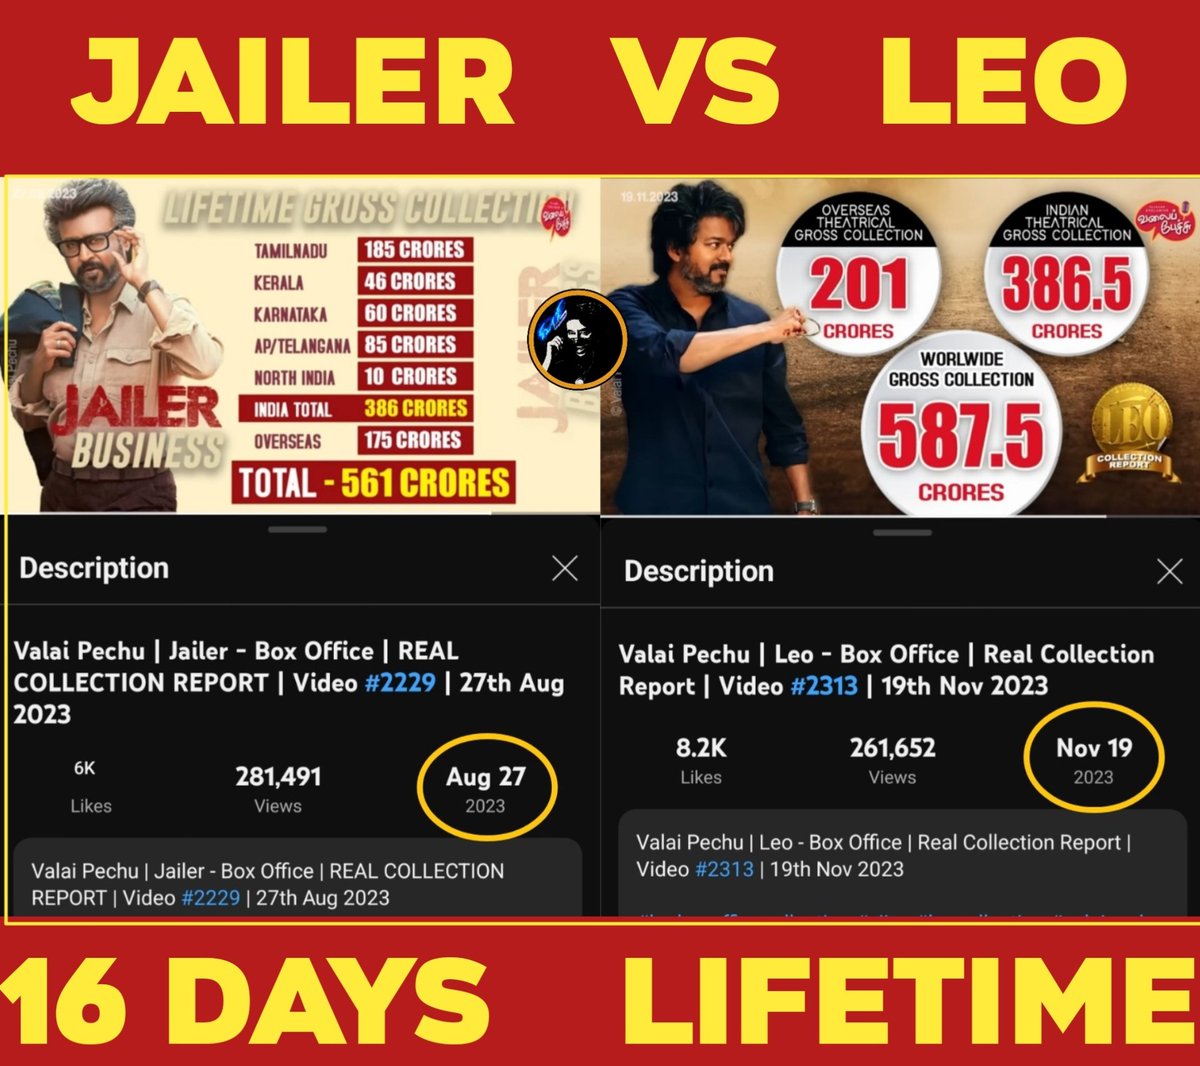 Leo (lifetime)
Jailer (16 days)